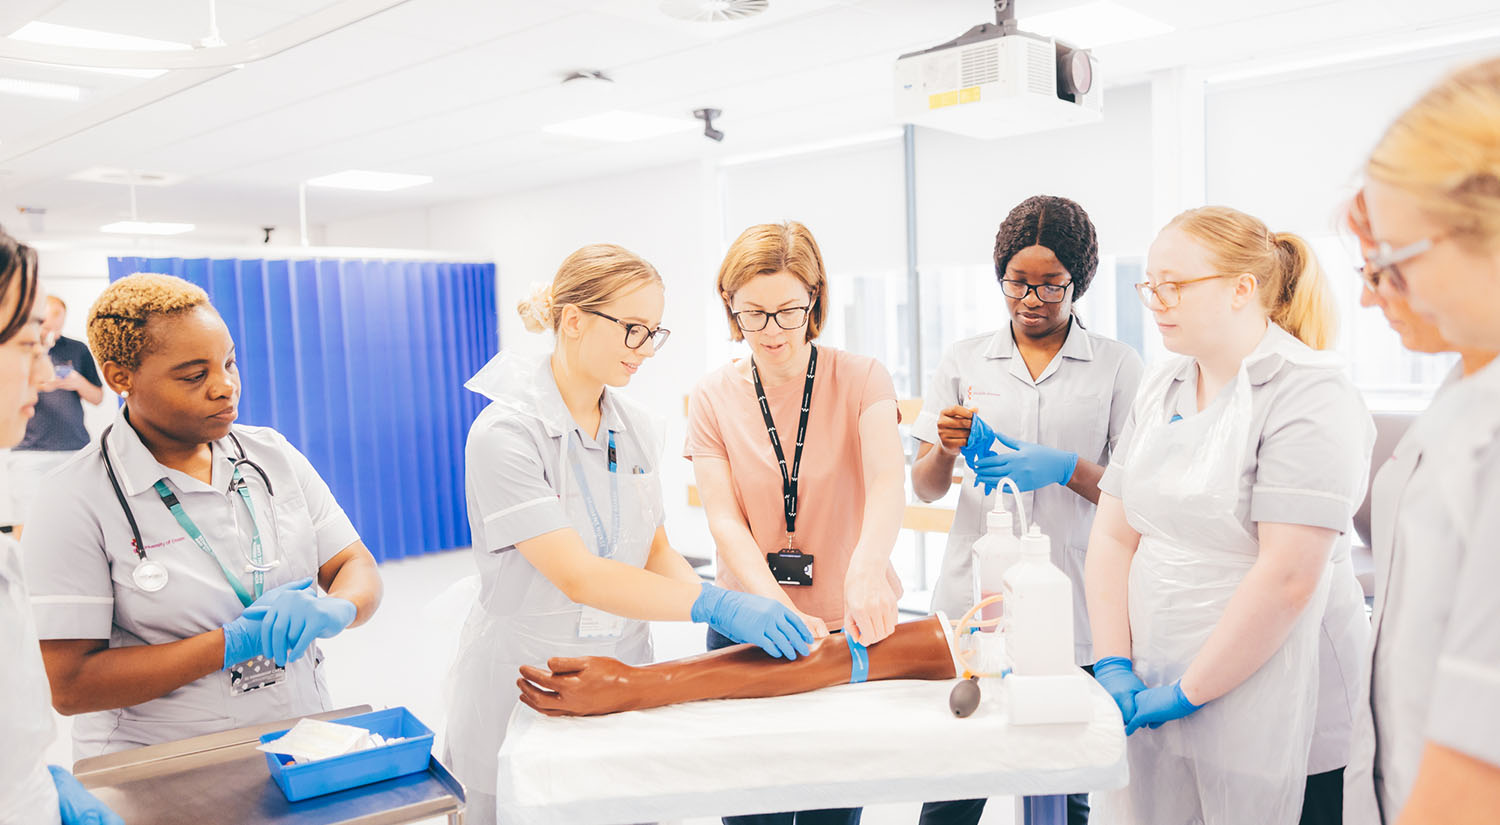 Nursing students practising taking blood specimens